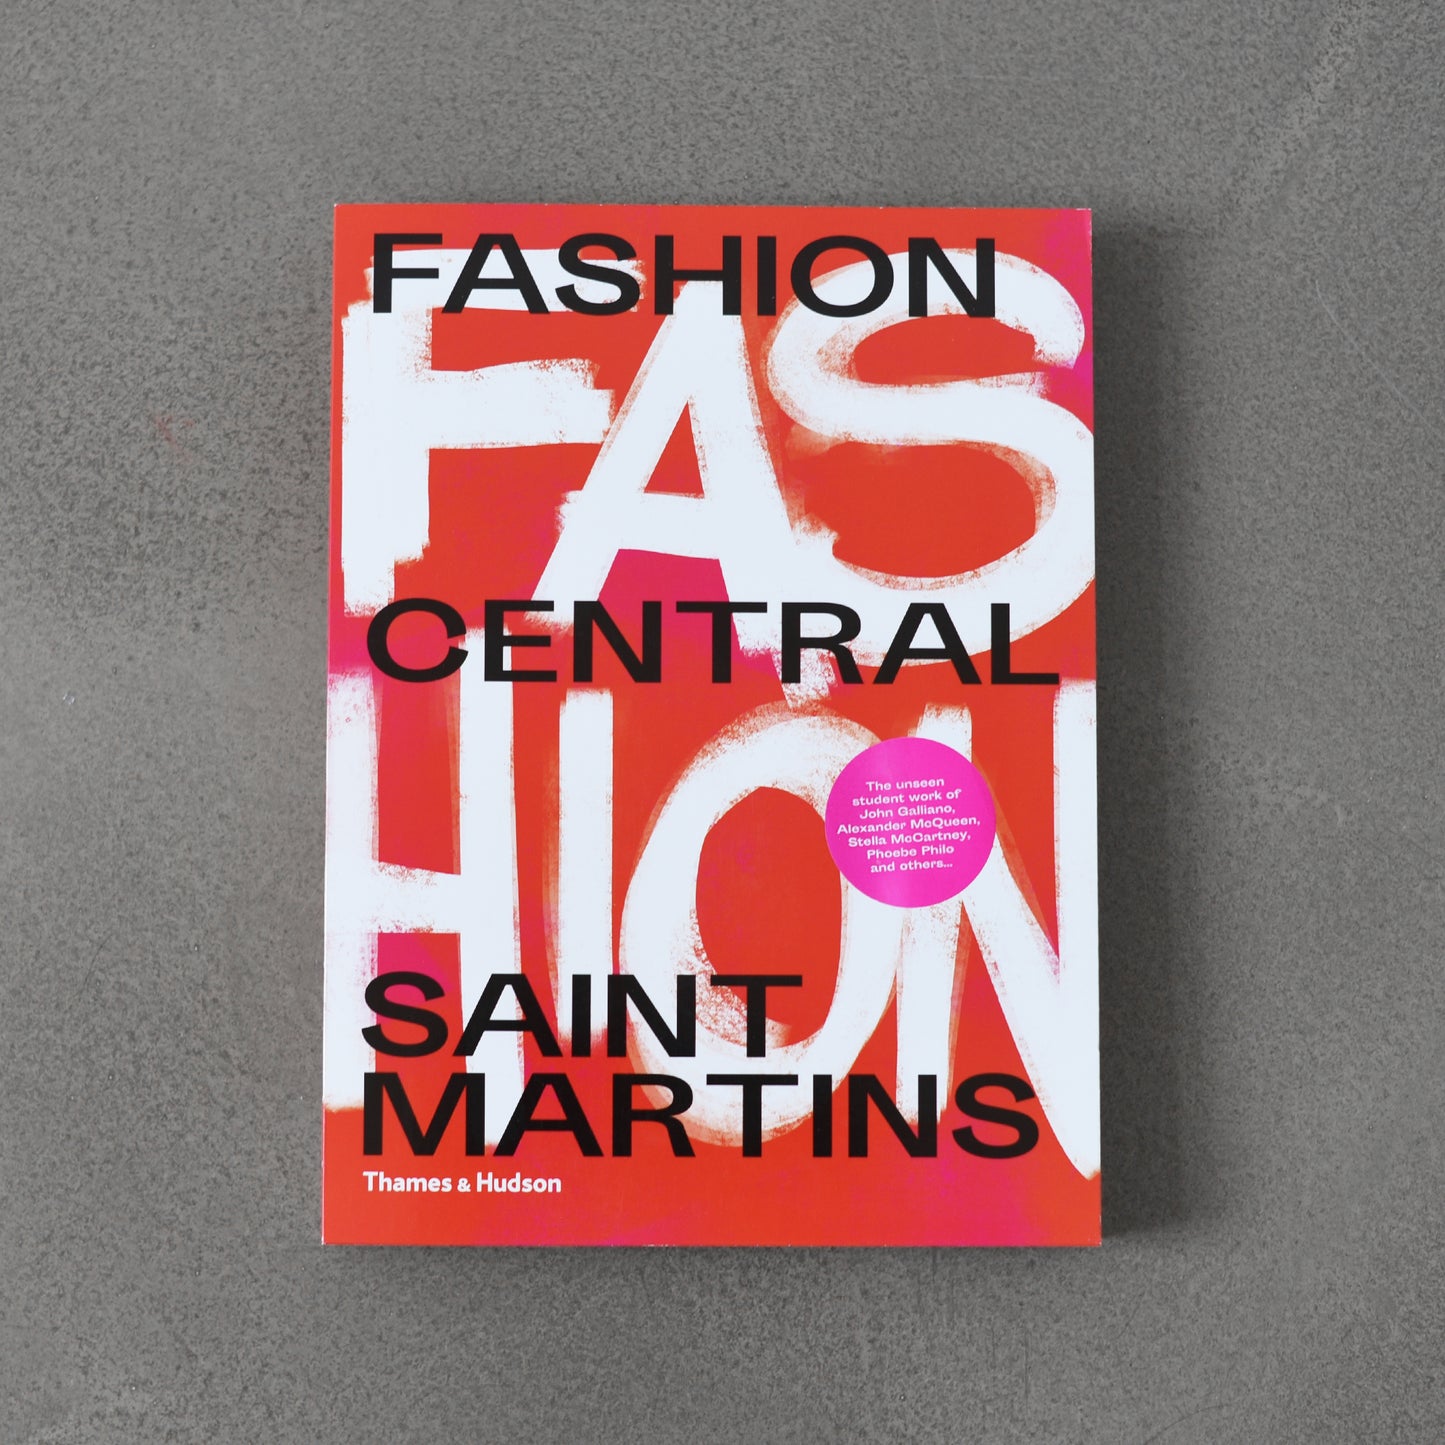 Fashion Central Saint-Martins